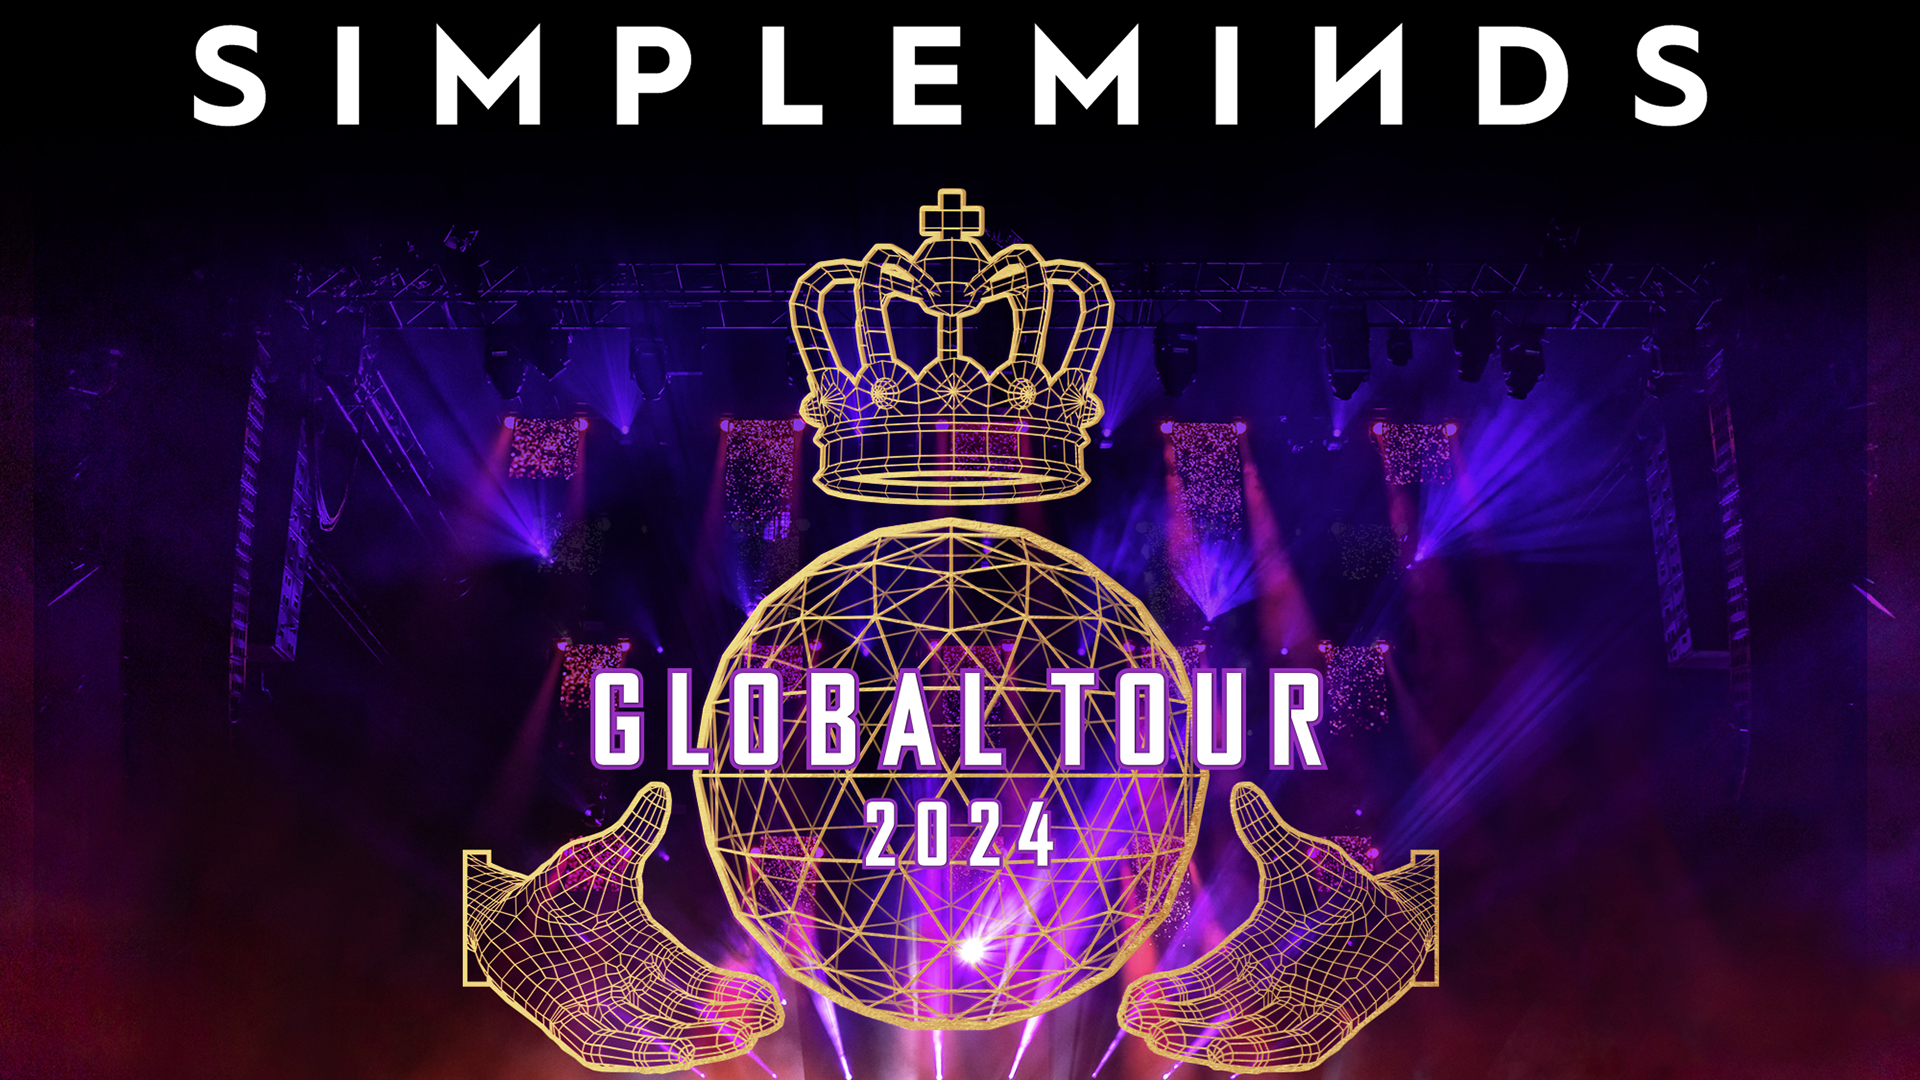 image  Simple Minds – Global tour 2024 